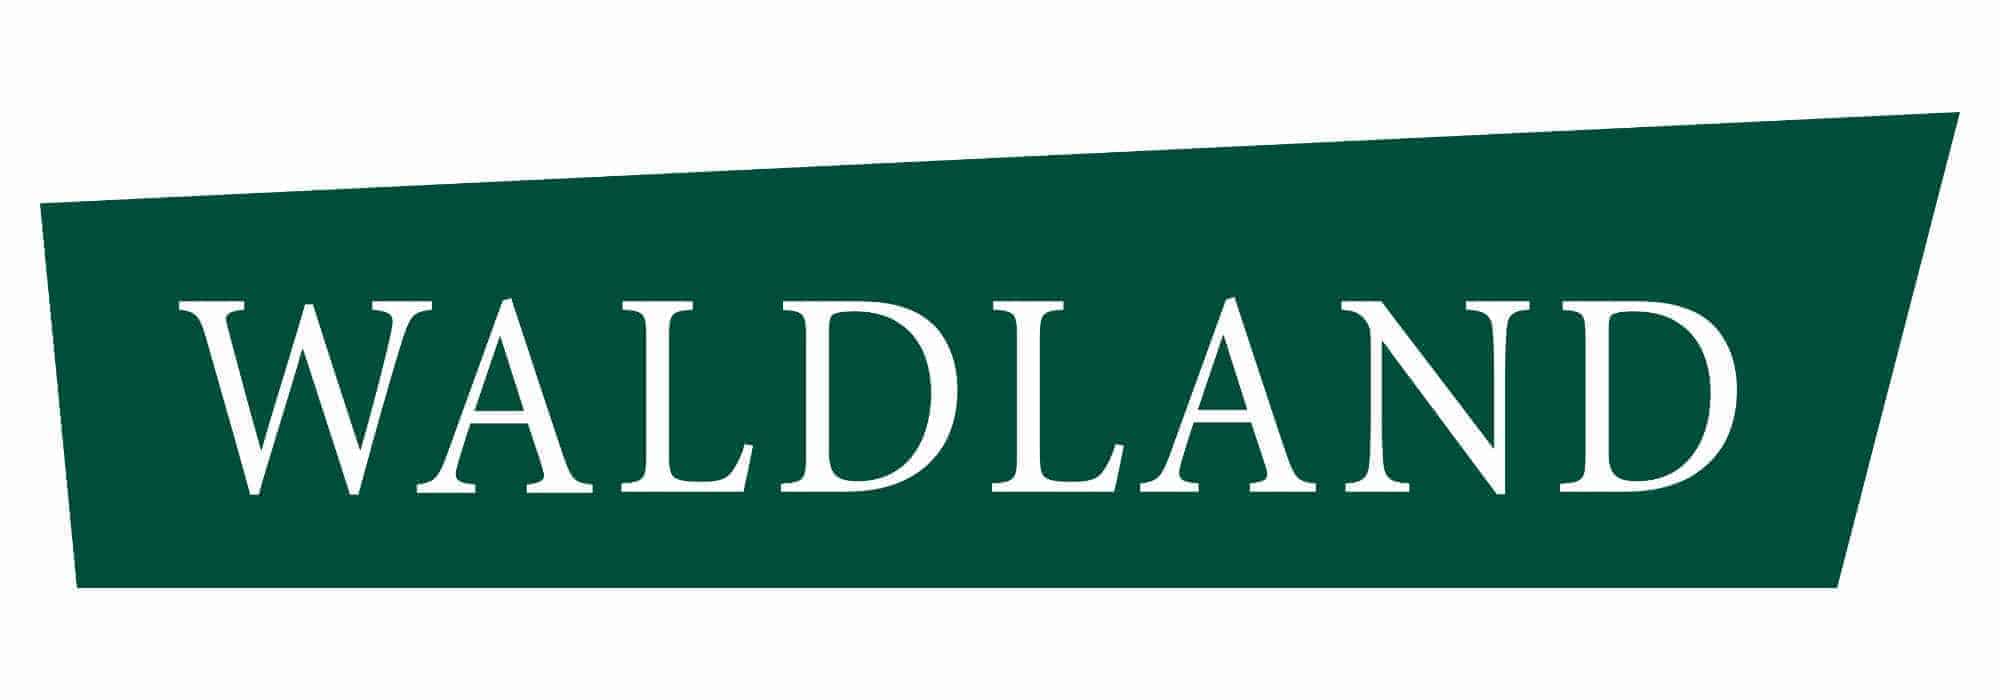 logo waldland oberwaltenreith